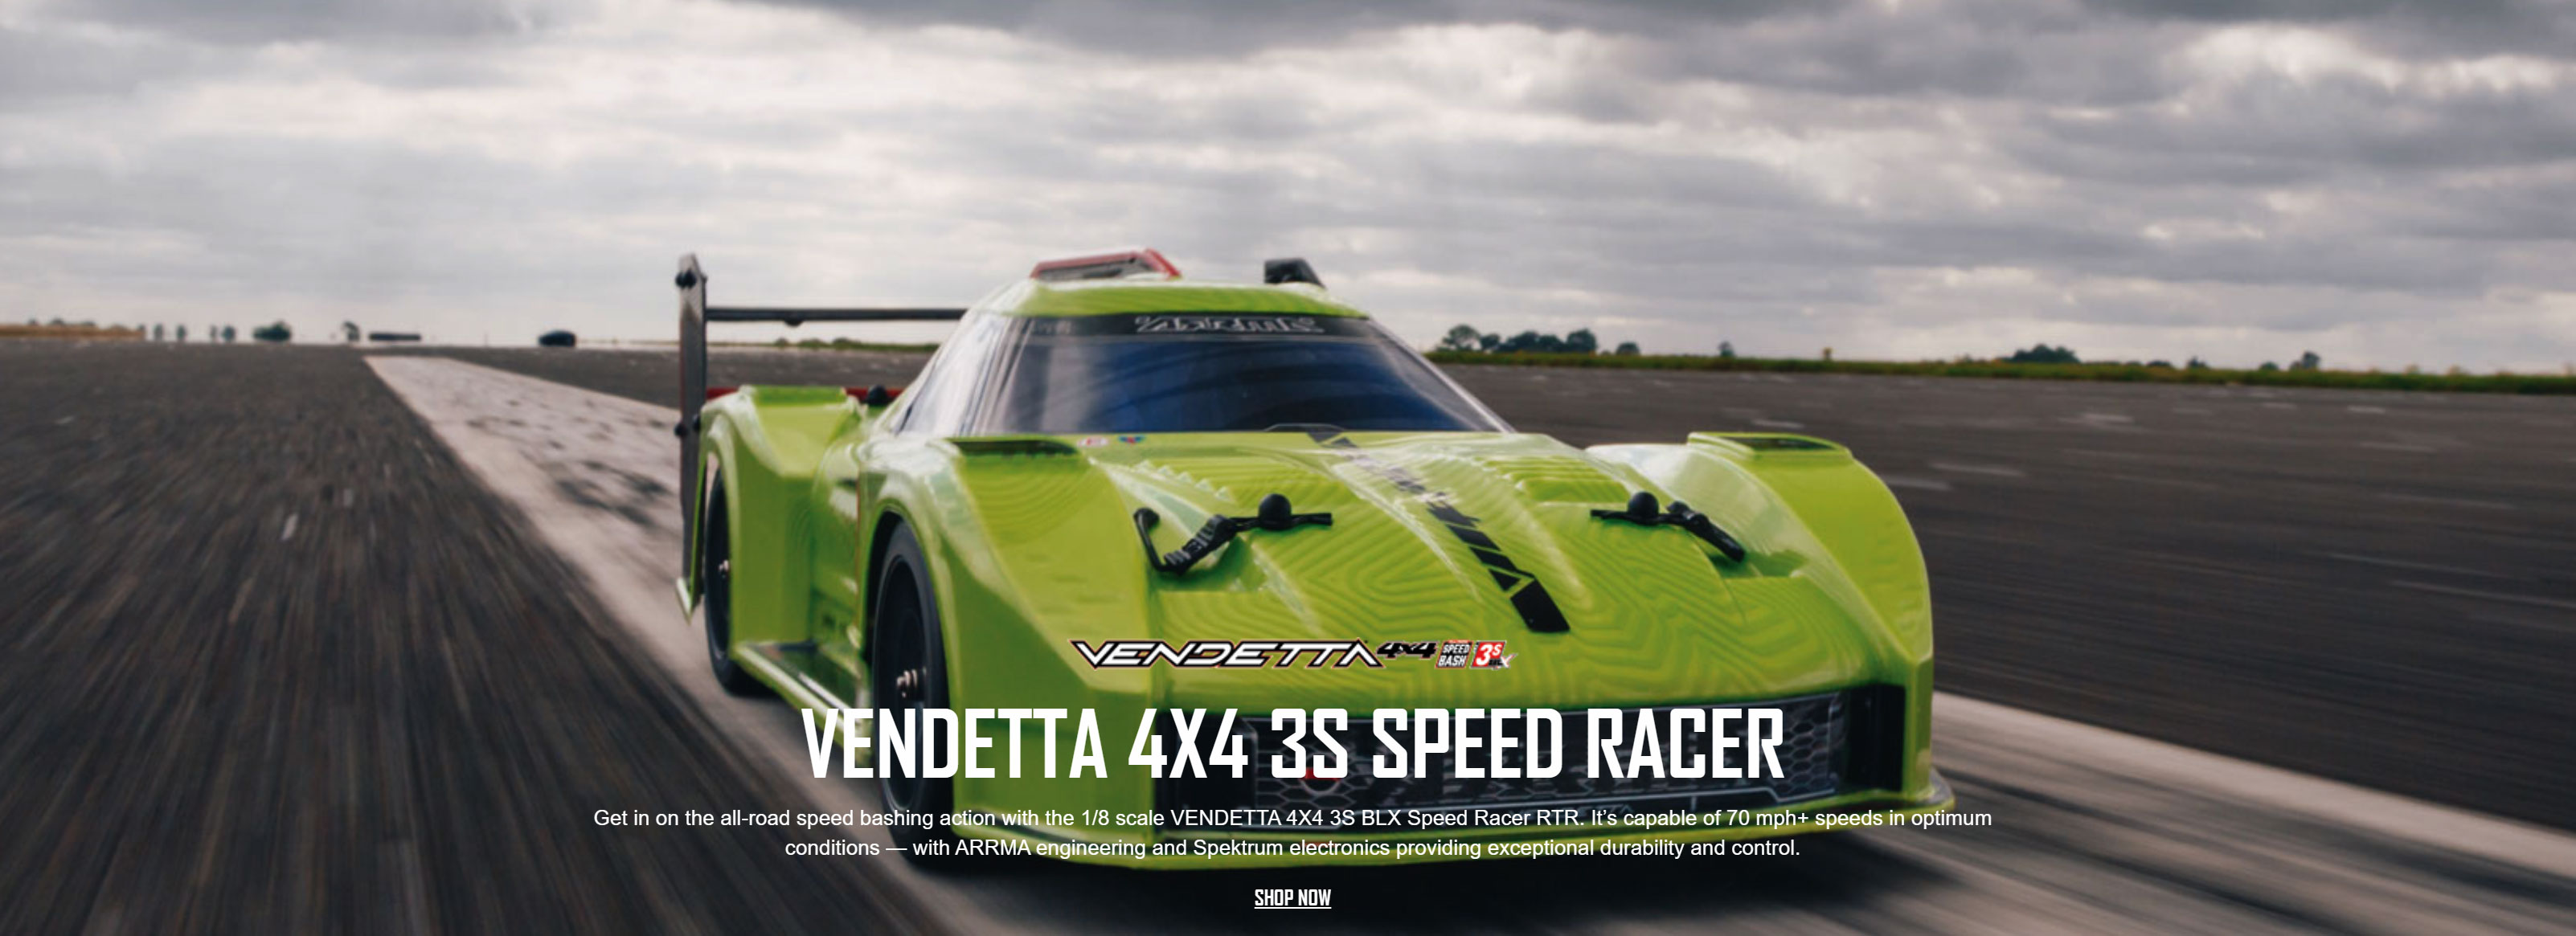 Arrma Vendetta 3S BLX Brushless 1/8 RTR Electric 4WD Speed Bash Racer